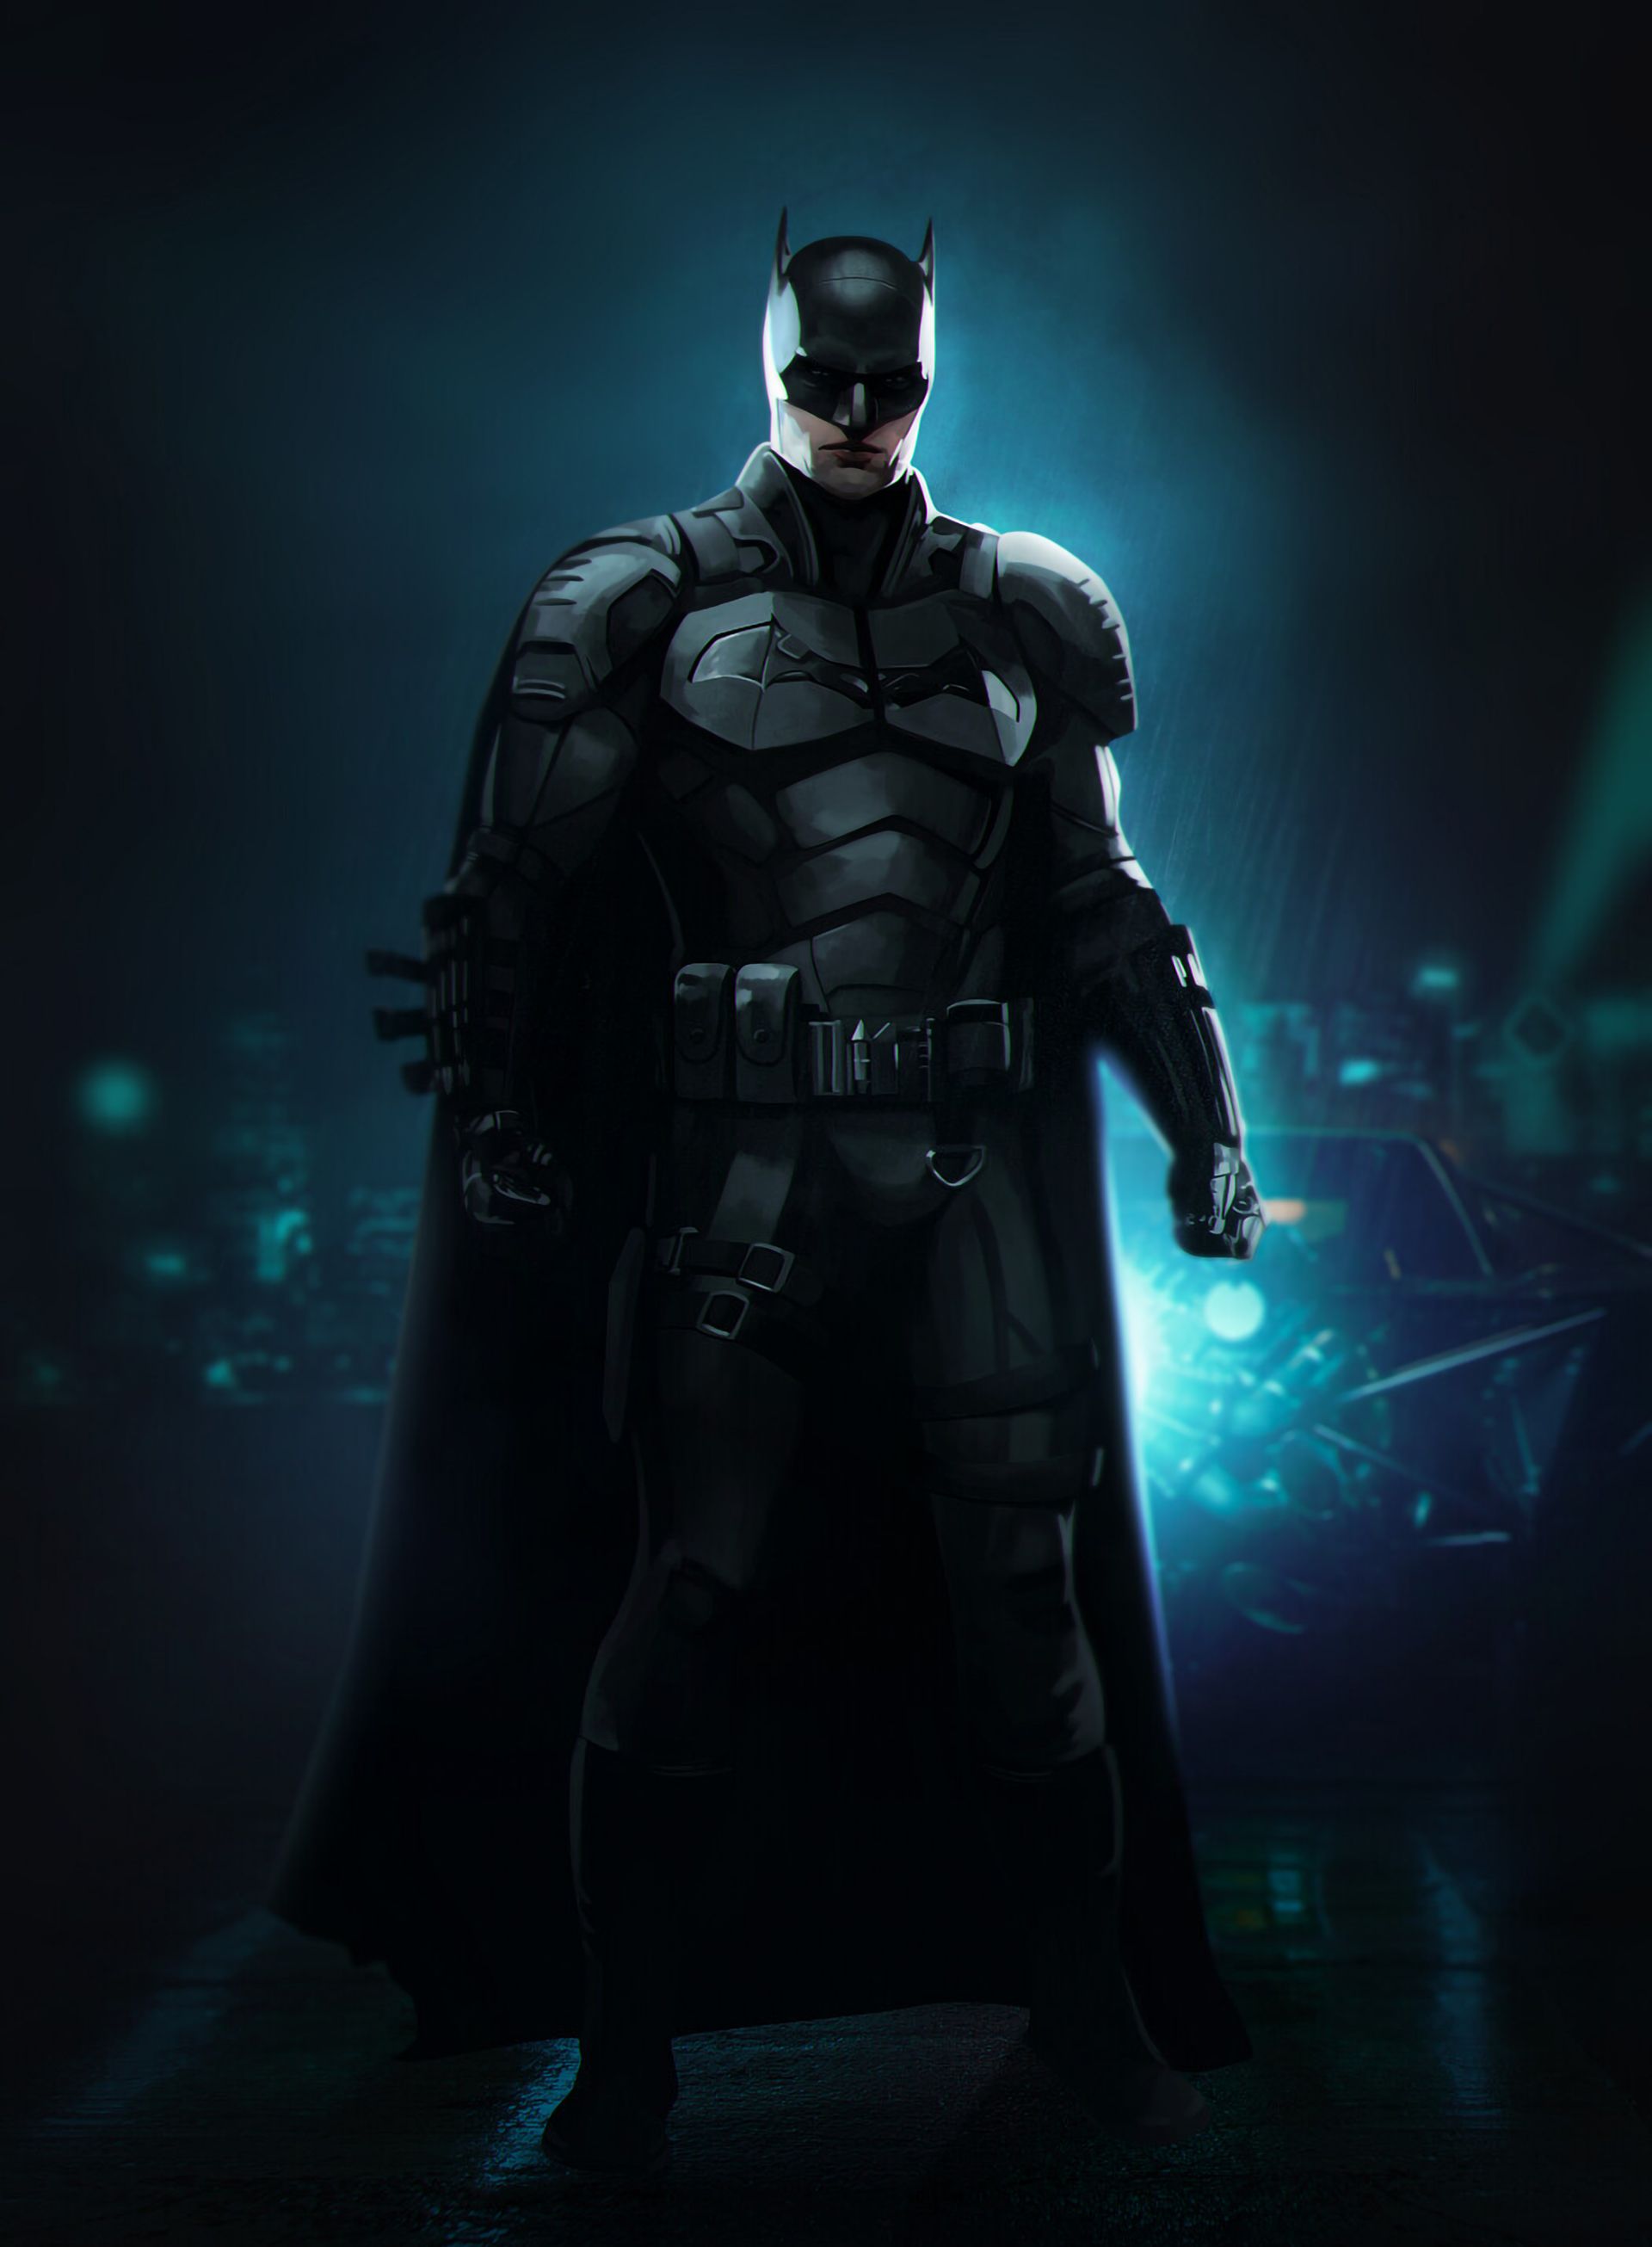 The Batman 2021 - Wallpapers : r/DC_Cinematic